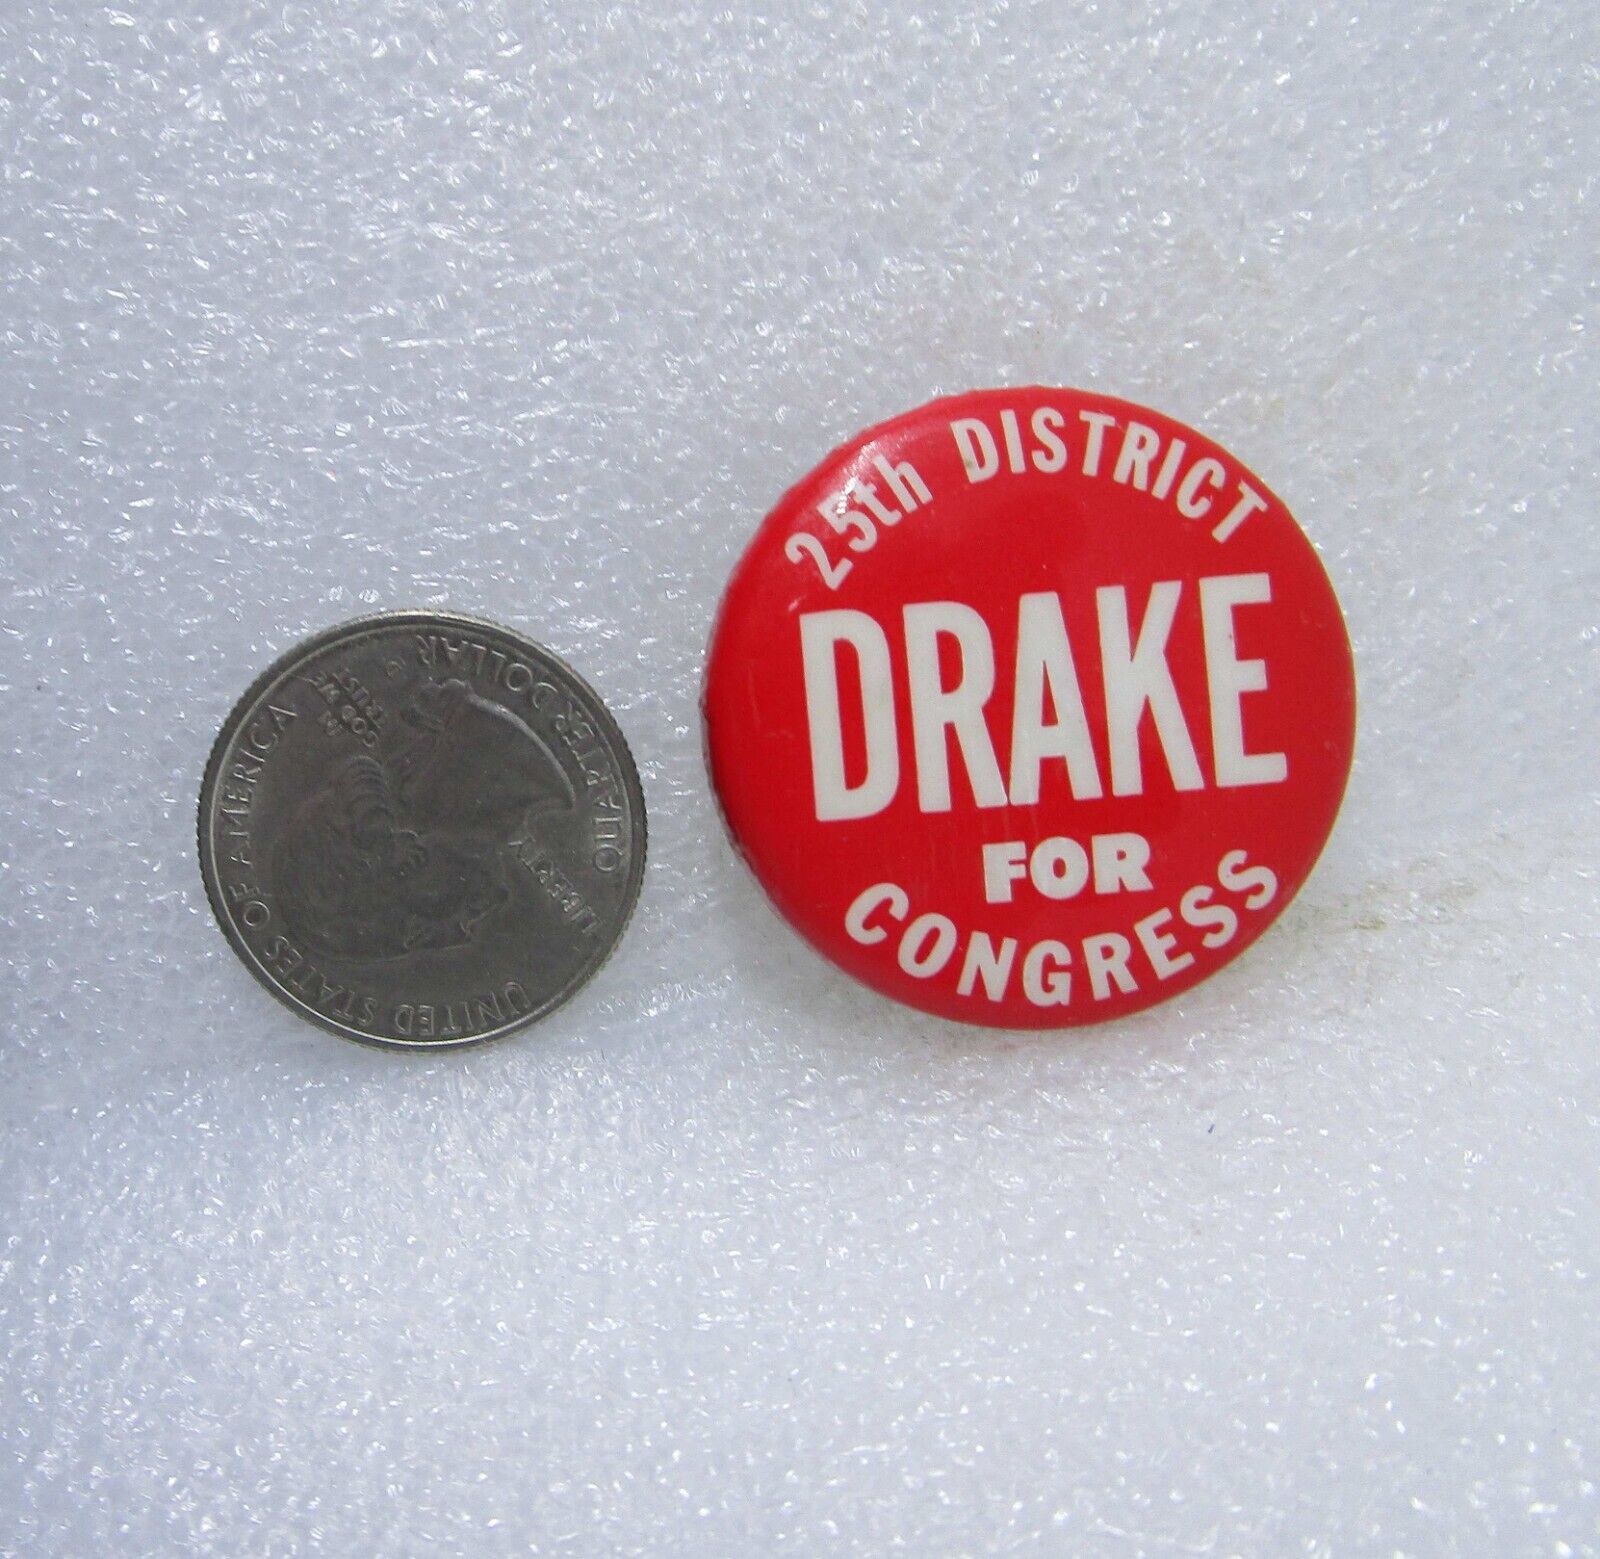 Drake For Congress 25th District Political Button Pin